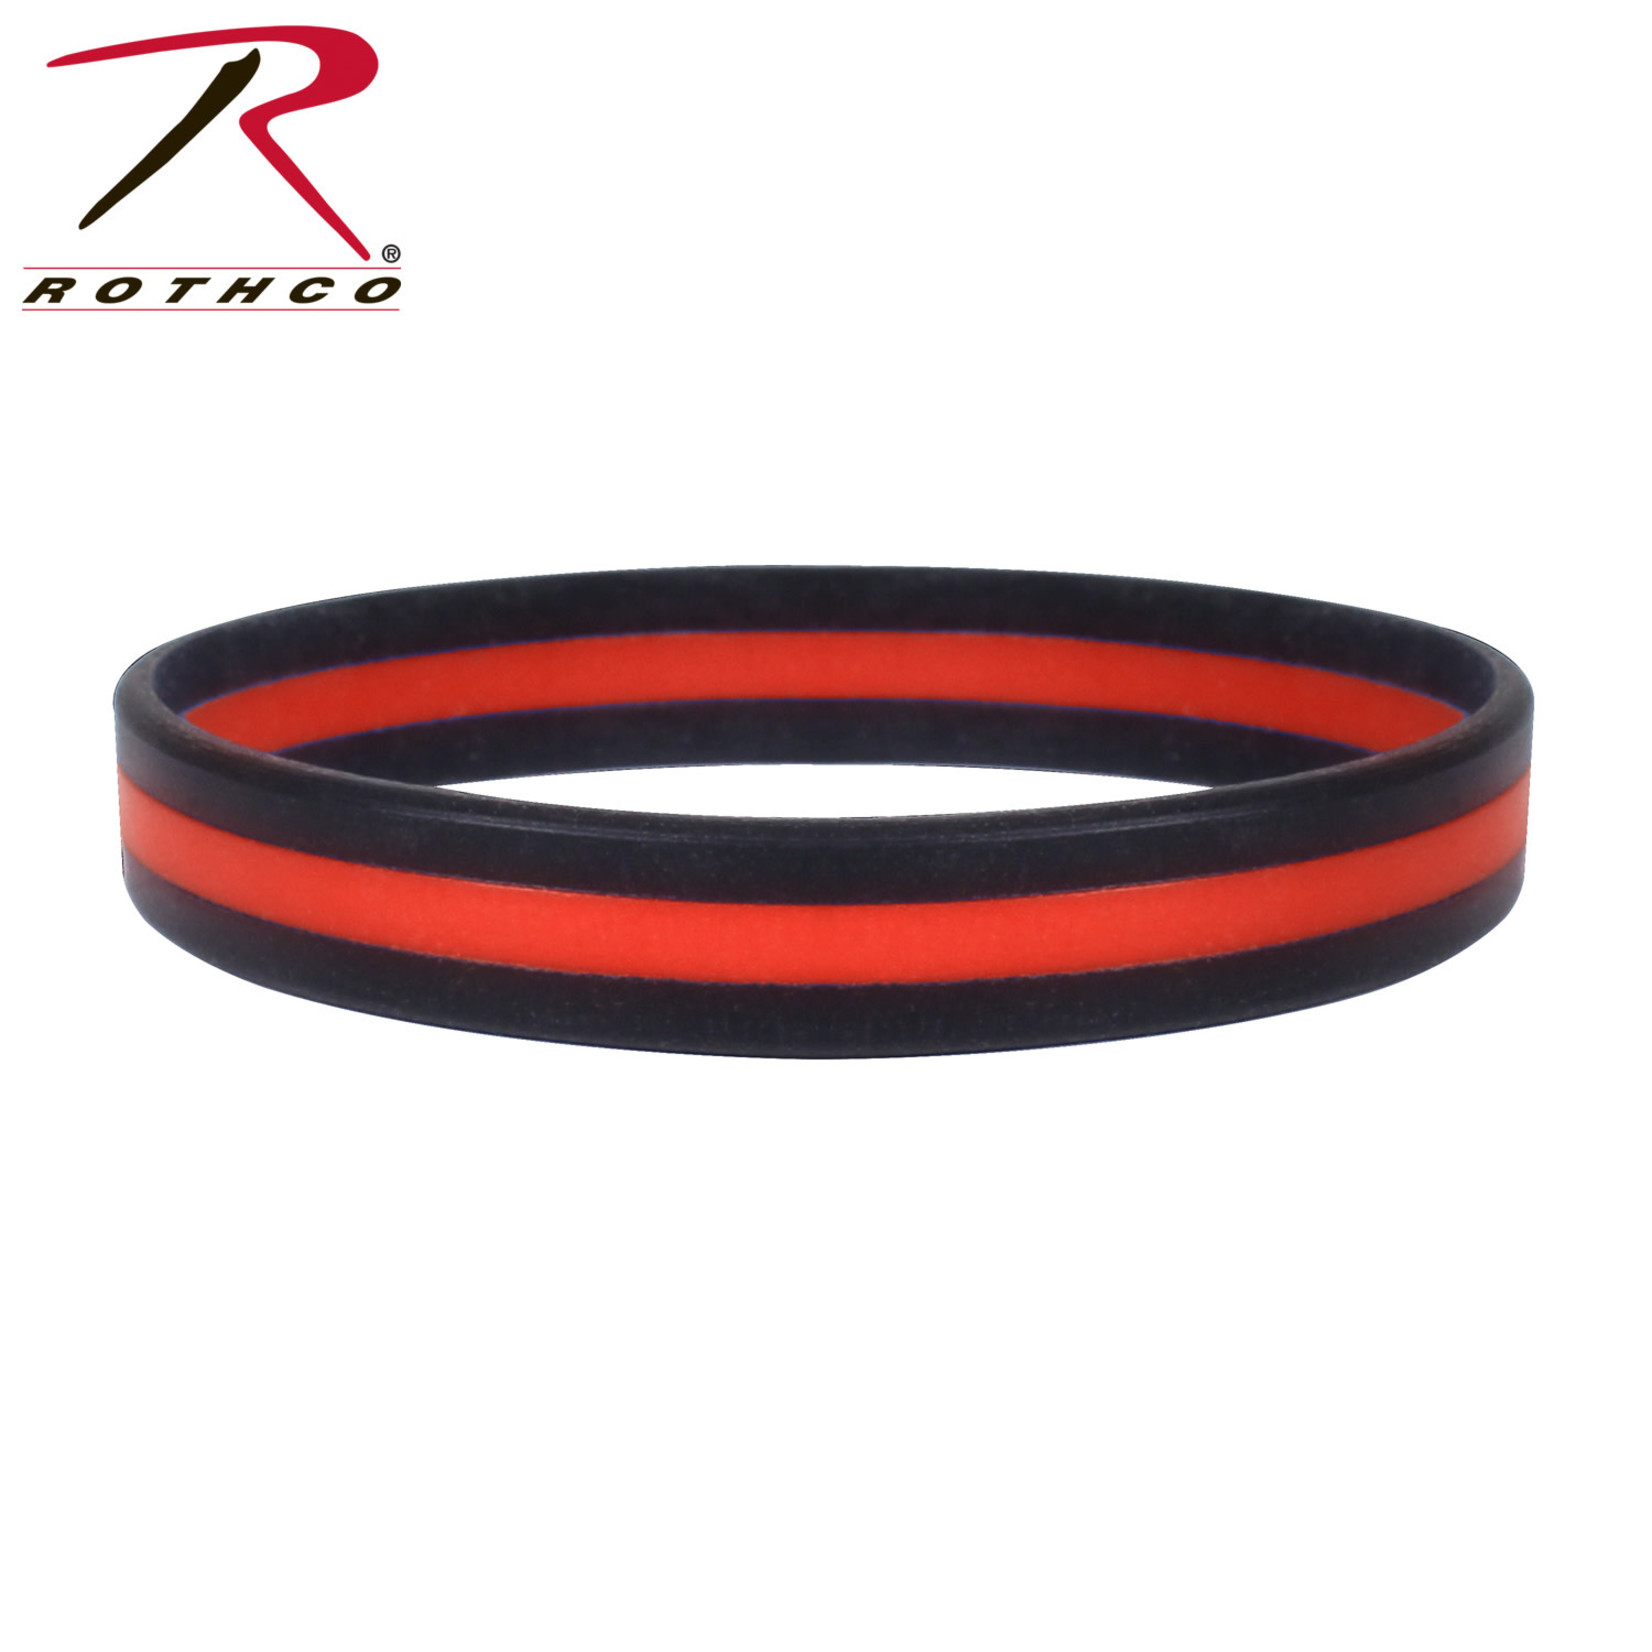 Rothco Rothco Thin Red Line Silicone Bracelet